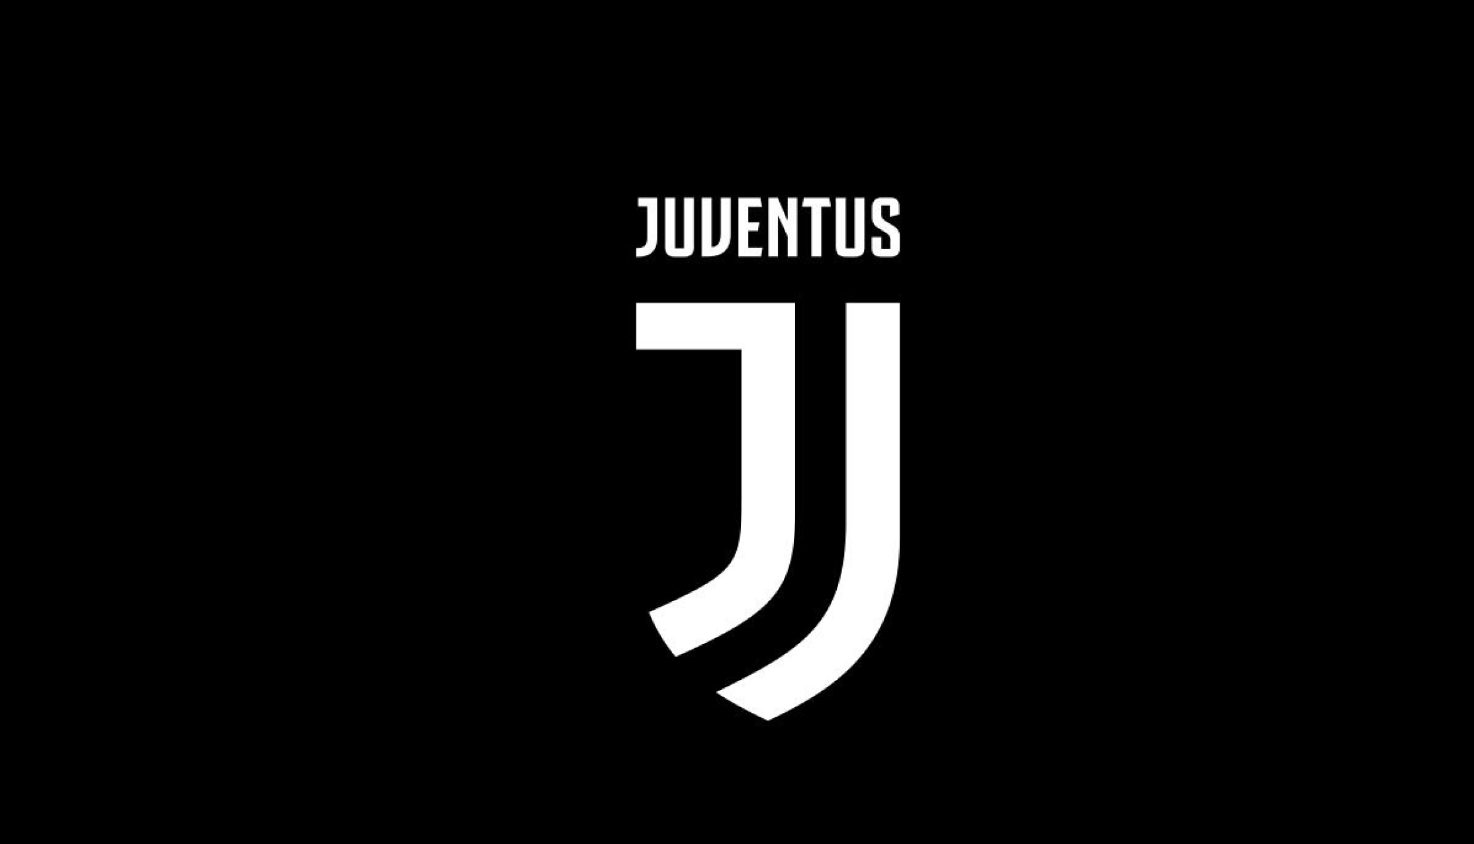 Juventus ont reçu